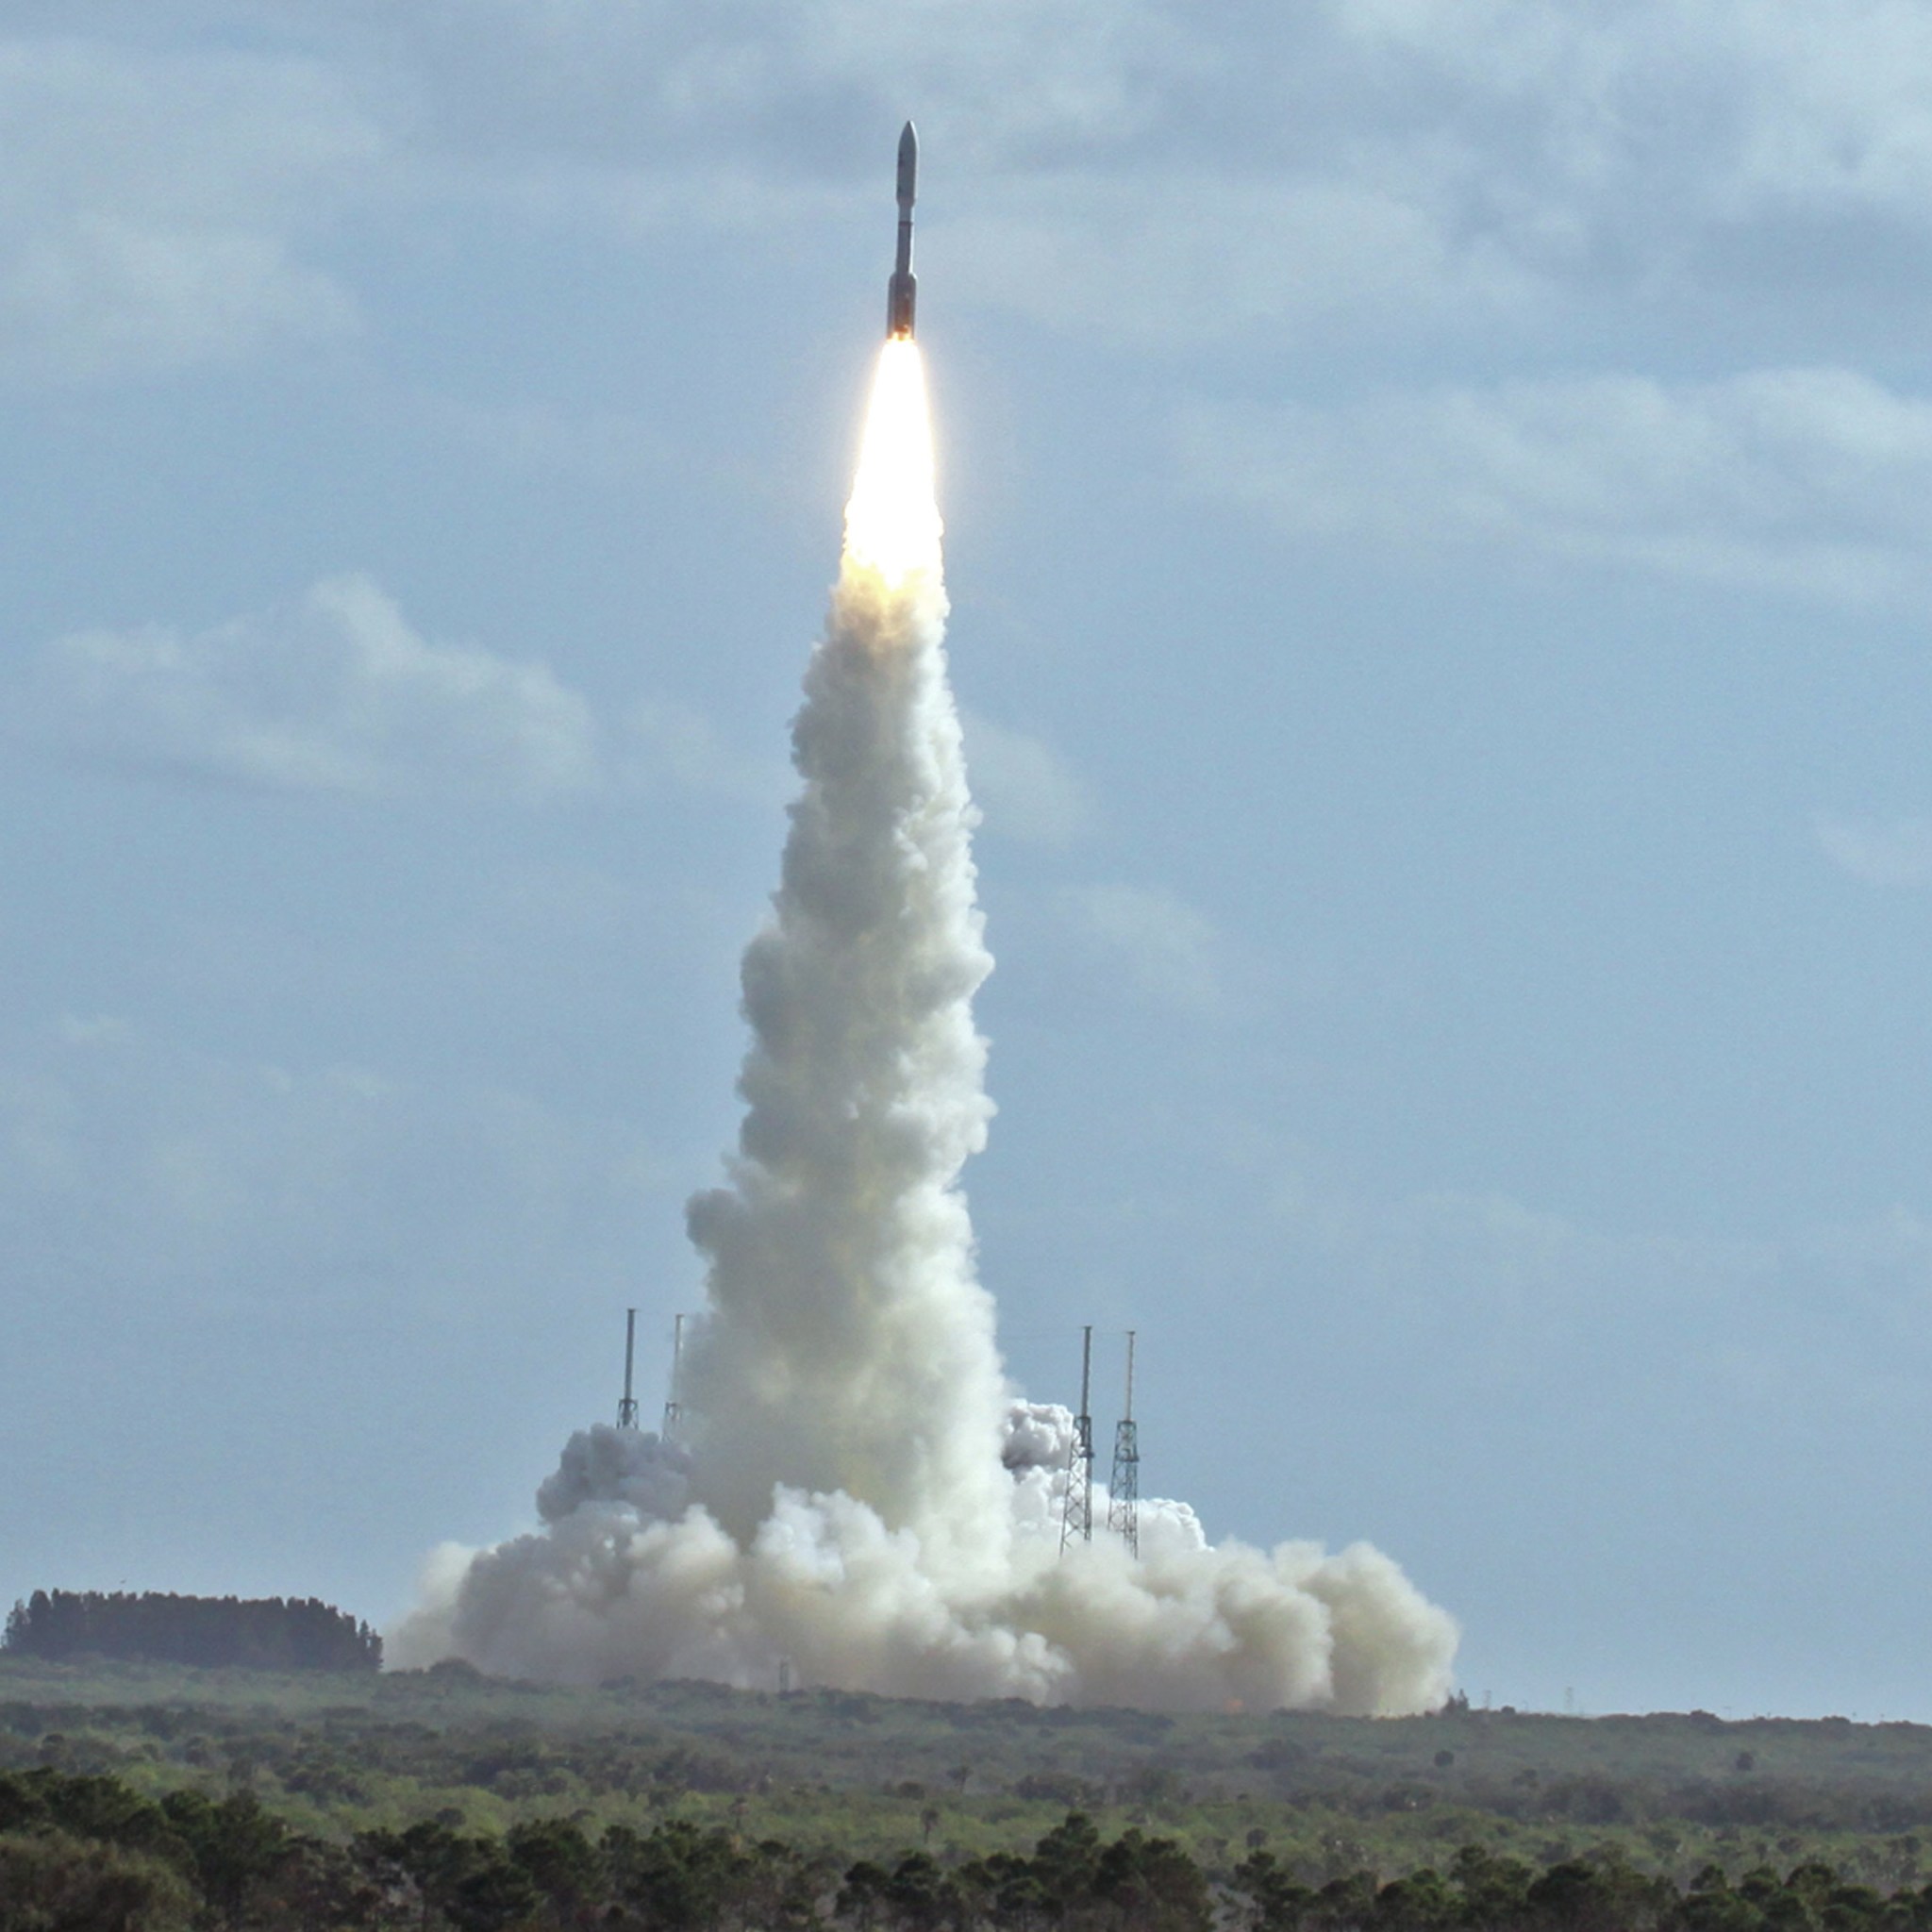 A launching rocket leaves a tall column of smoke beneath